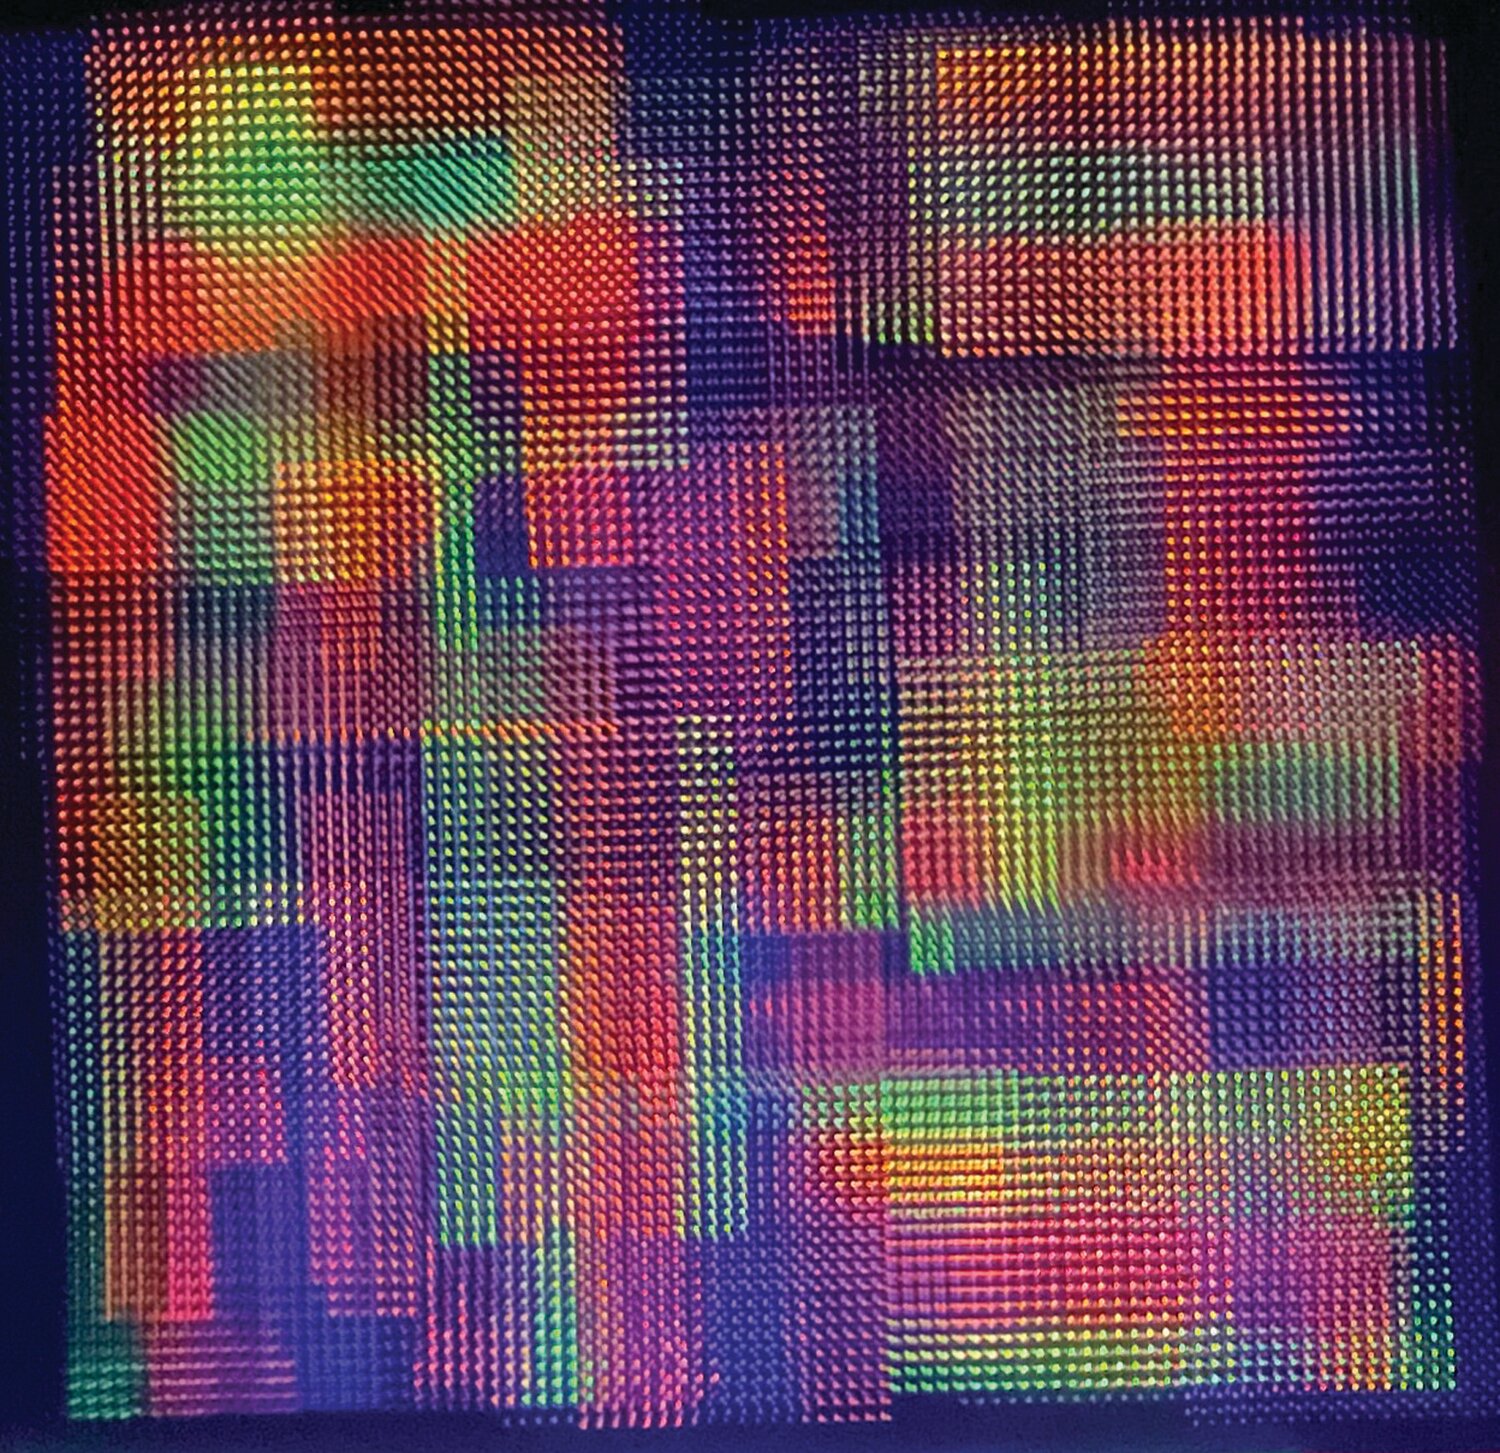 “Dot Matrix” on canvas is by John Spears.